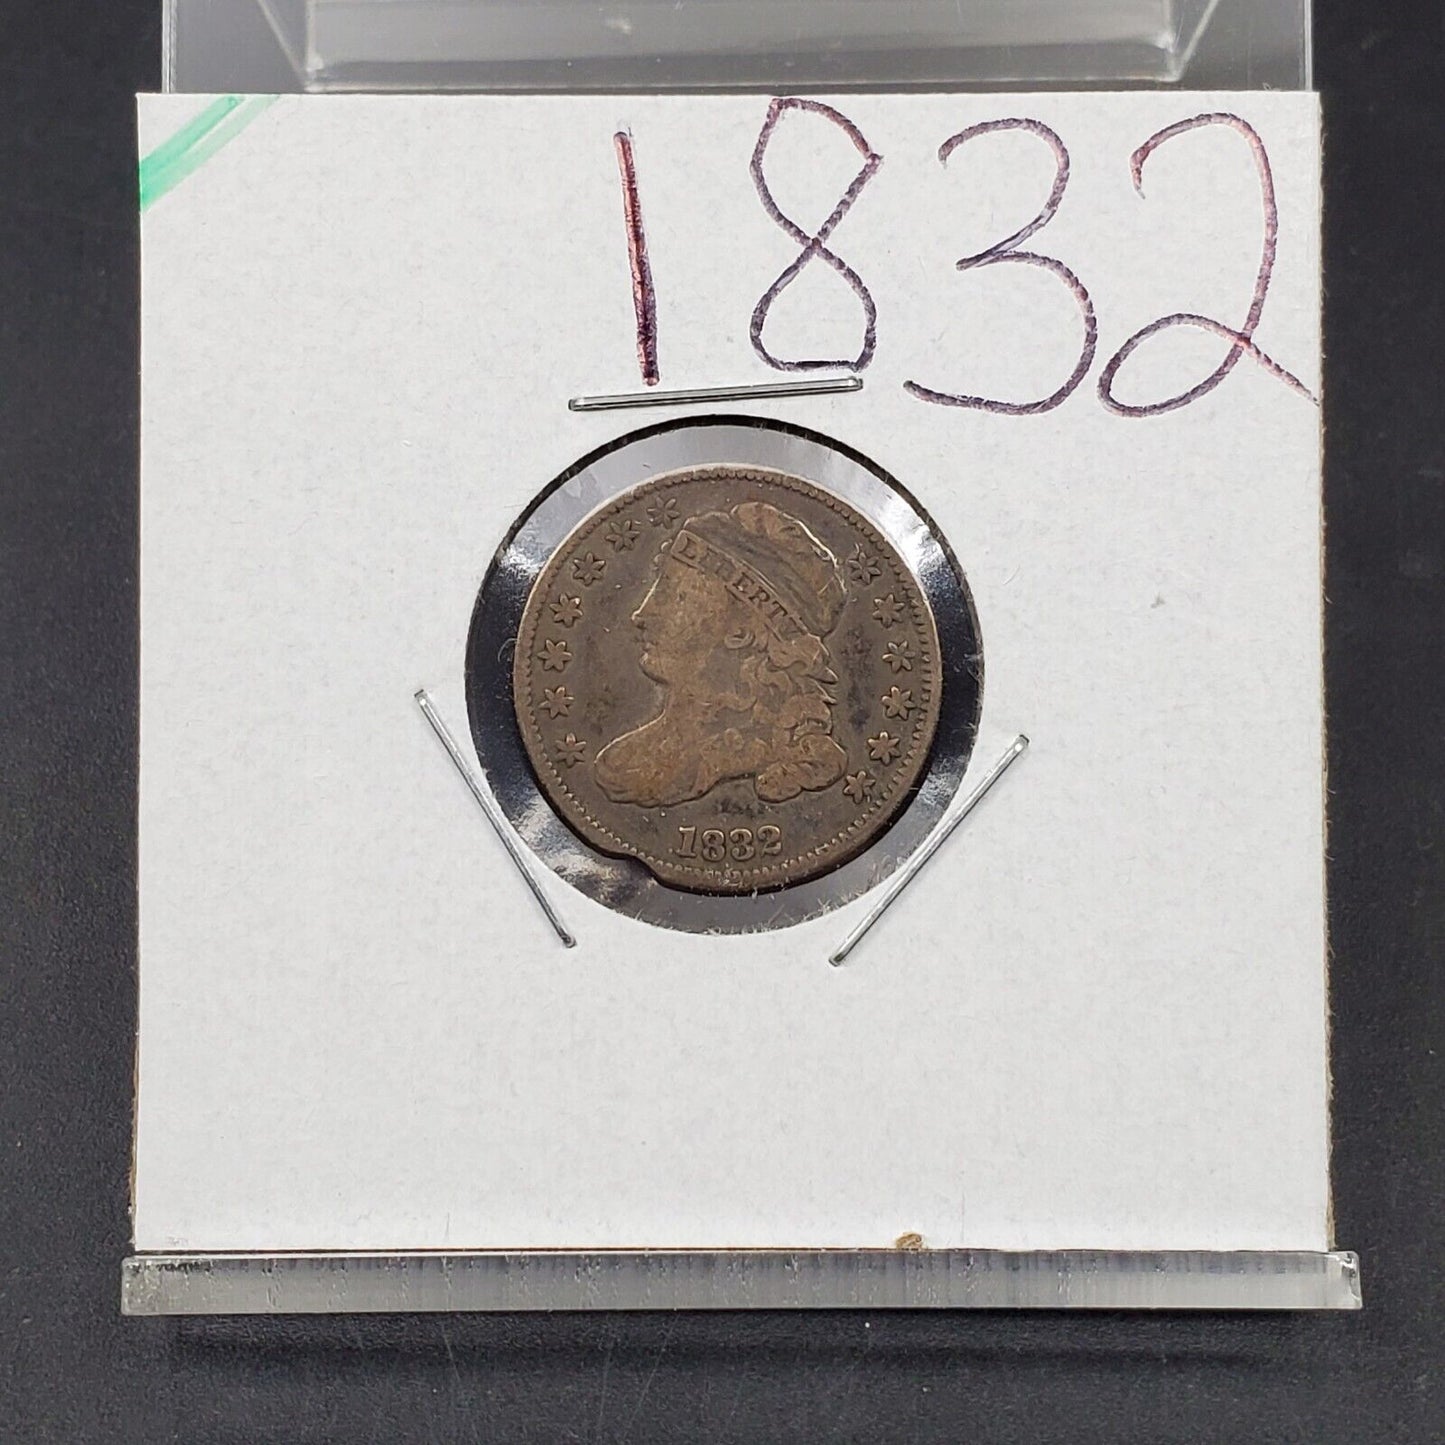 1832 P Capped Bust Silver Dime Coin CH VG / FINE Details Rim Nick